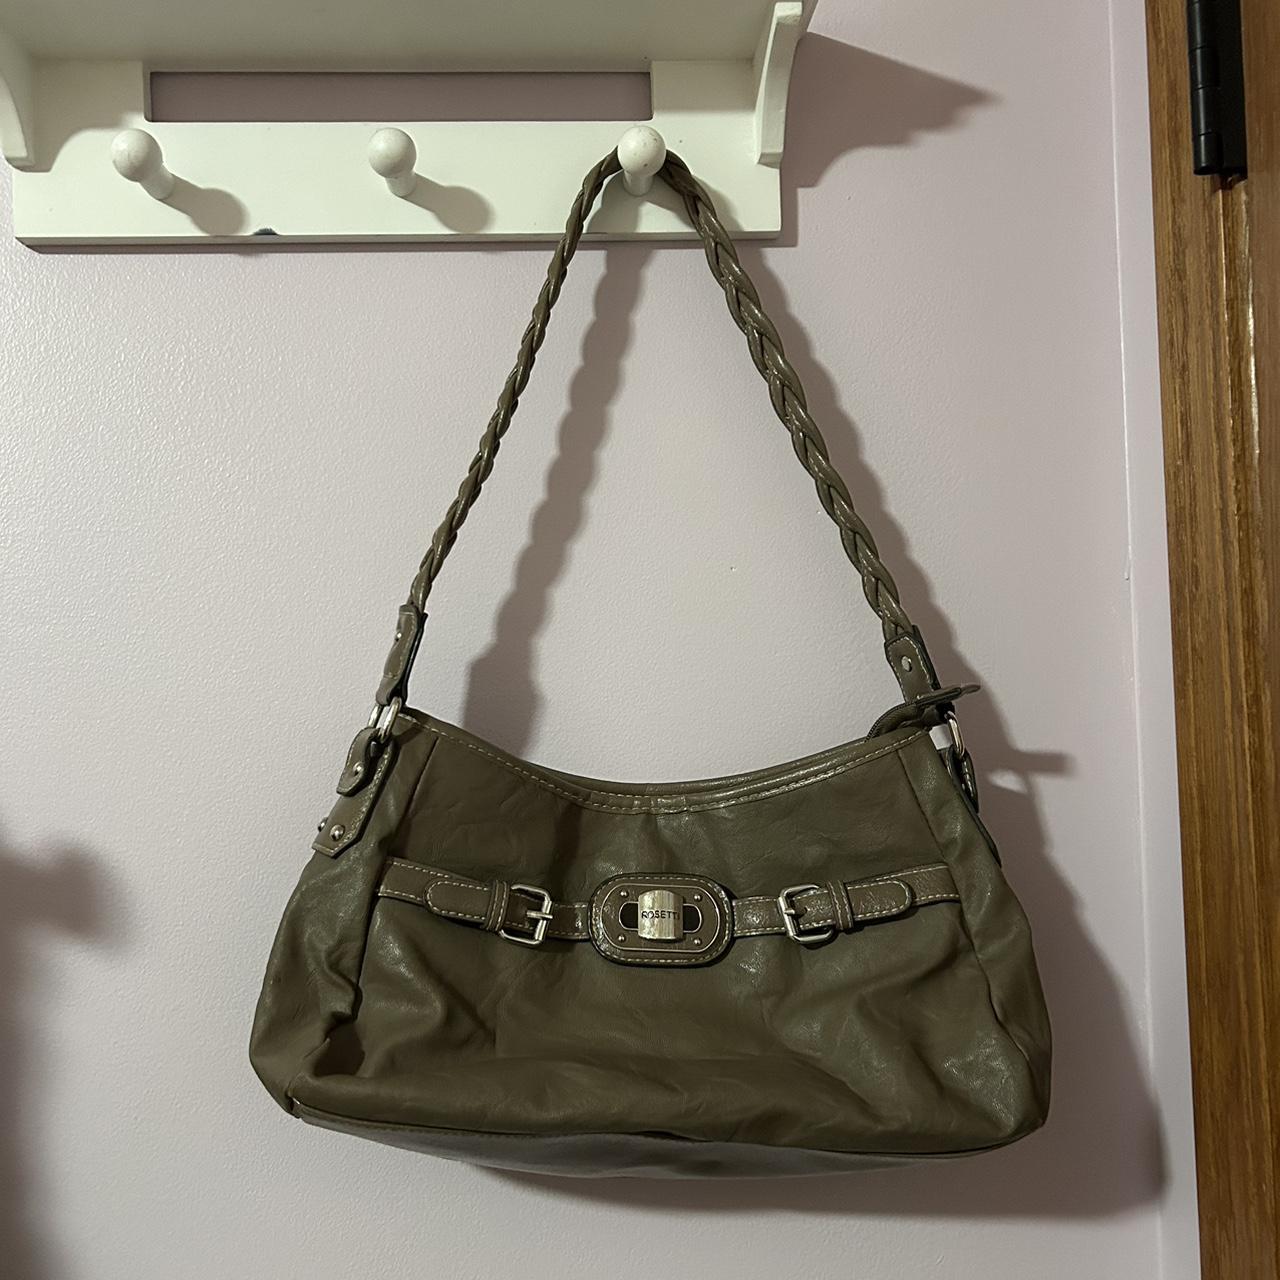 Rosetti Holiday Party Purse Handbag Joy Color Black Size OS: Handbags:  Amazon.com